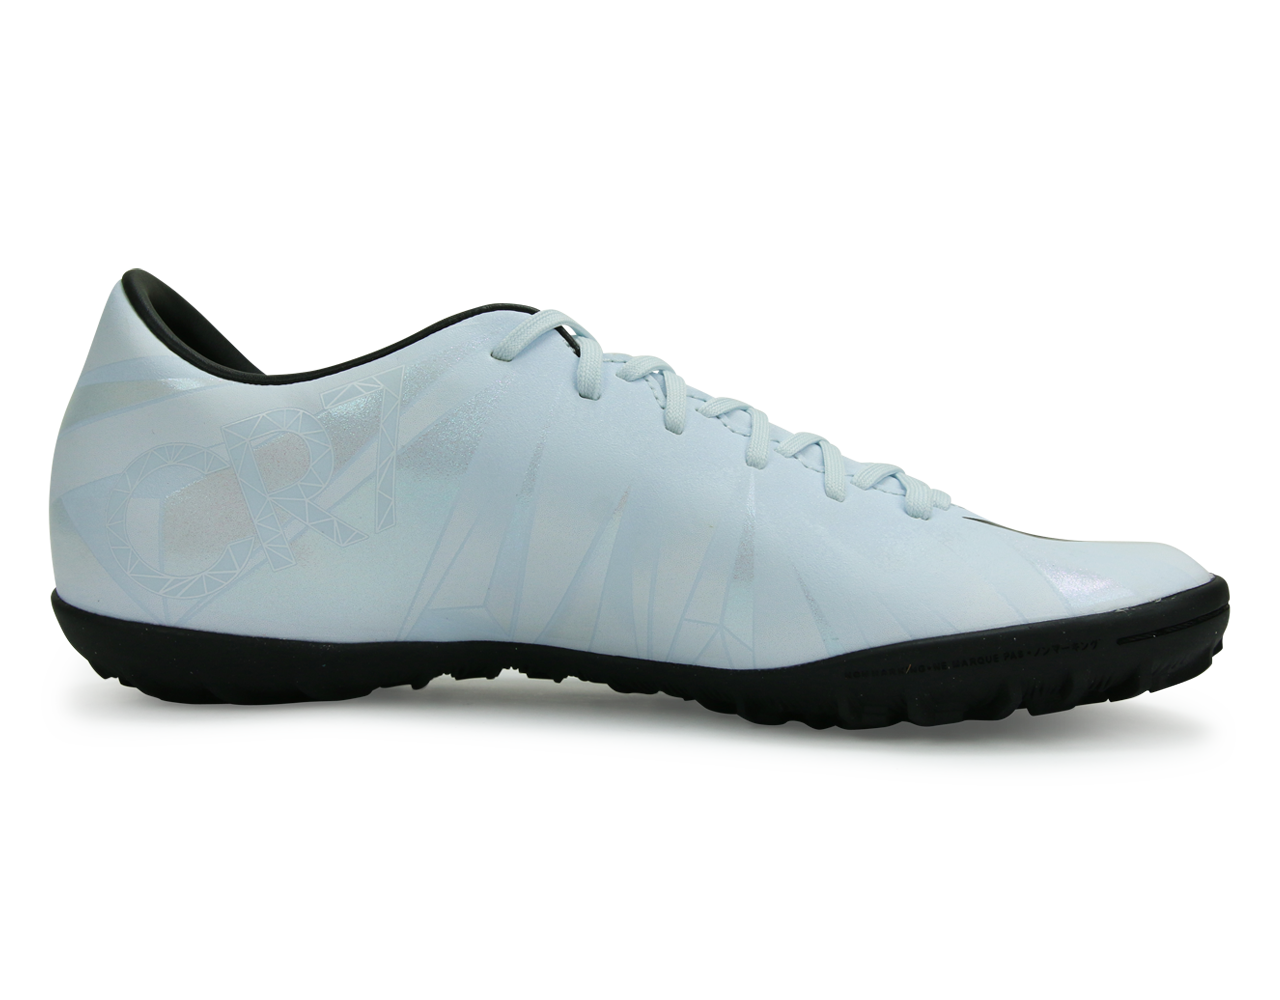 Nike Men's Mercurial Victory VI CR7 Turf Soccer Shoes Blue Tint/Black/White